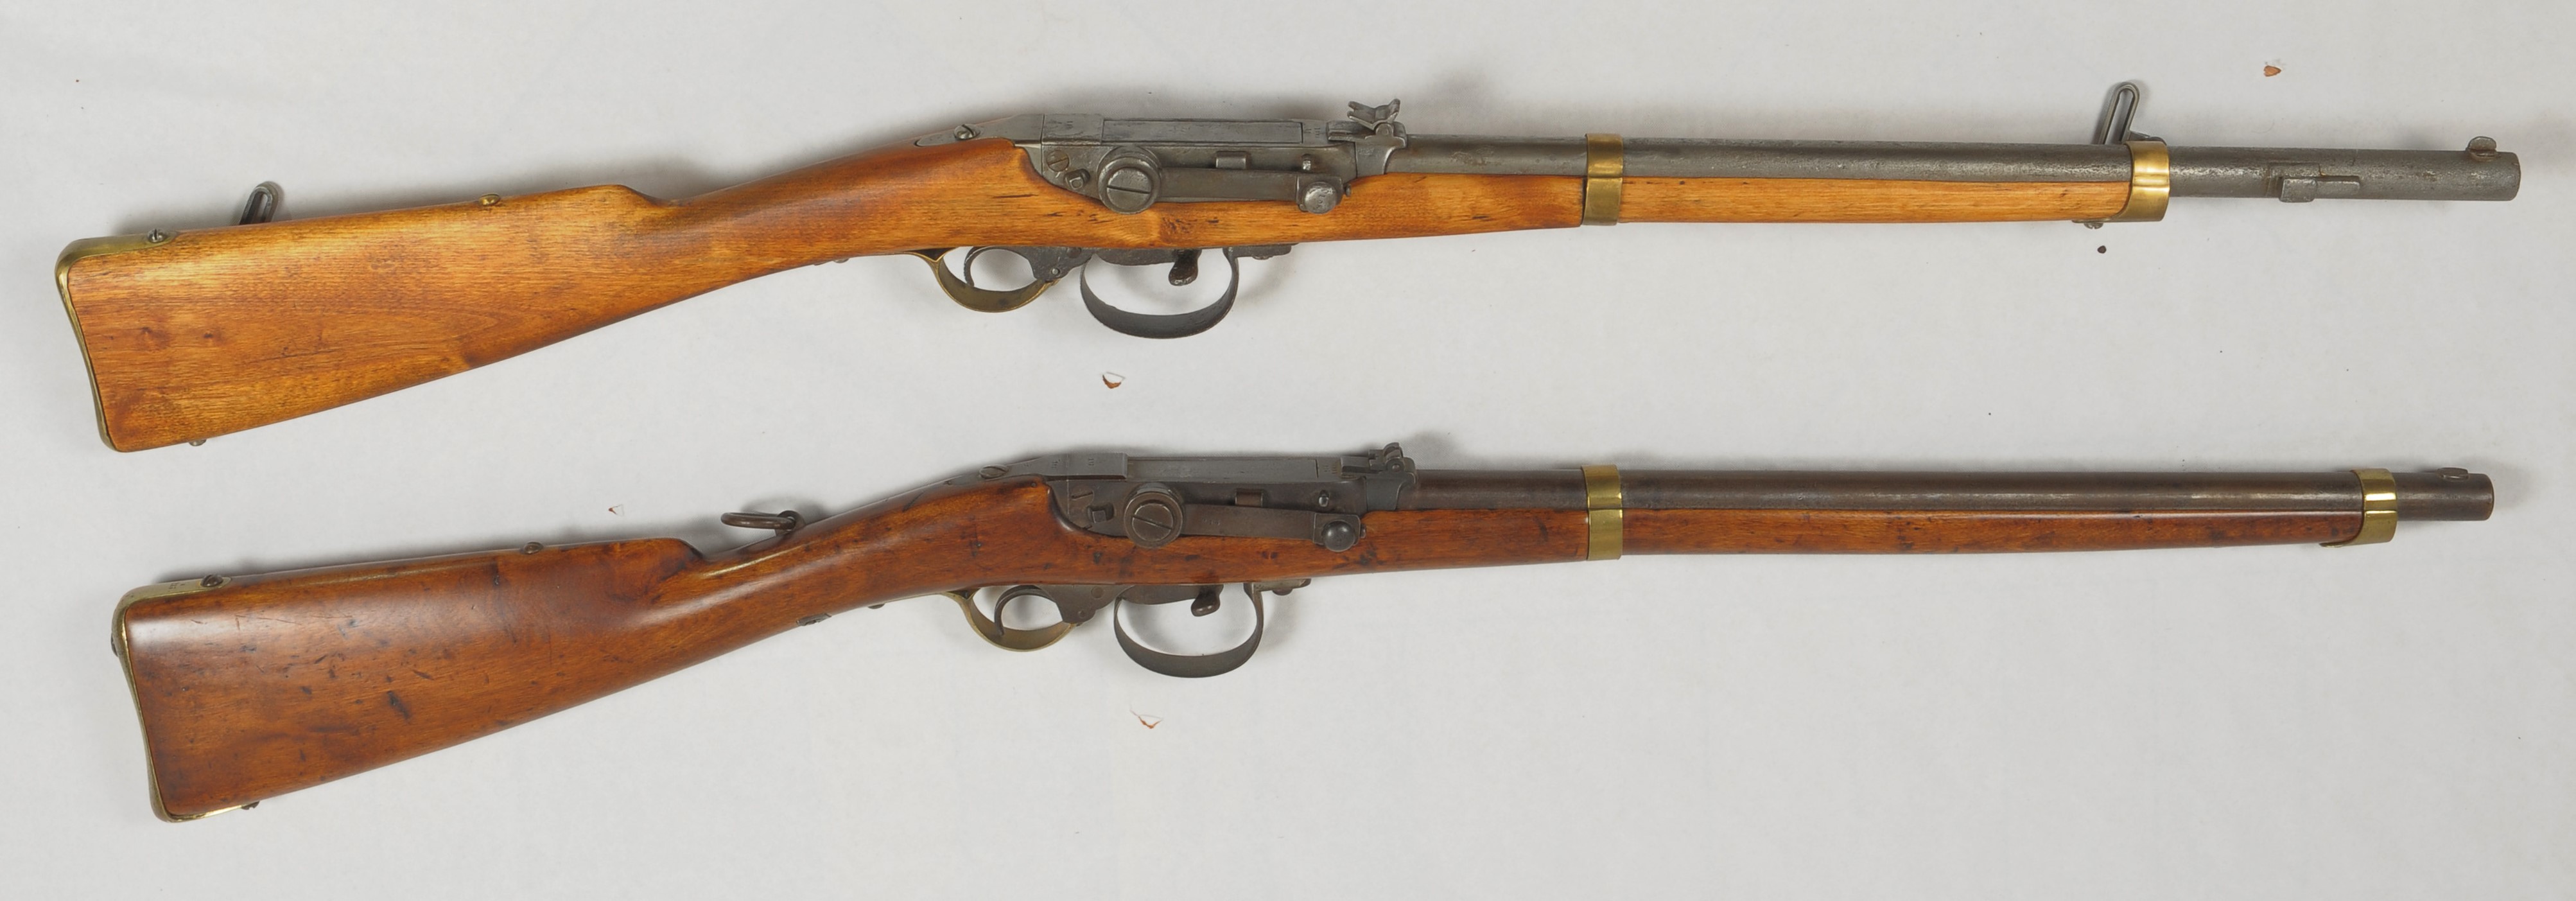 ./guns/rifle/bilder/Rifle-Kongsberg-Kammerlader-M1857-59-1.jpg